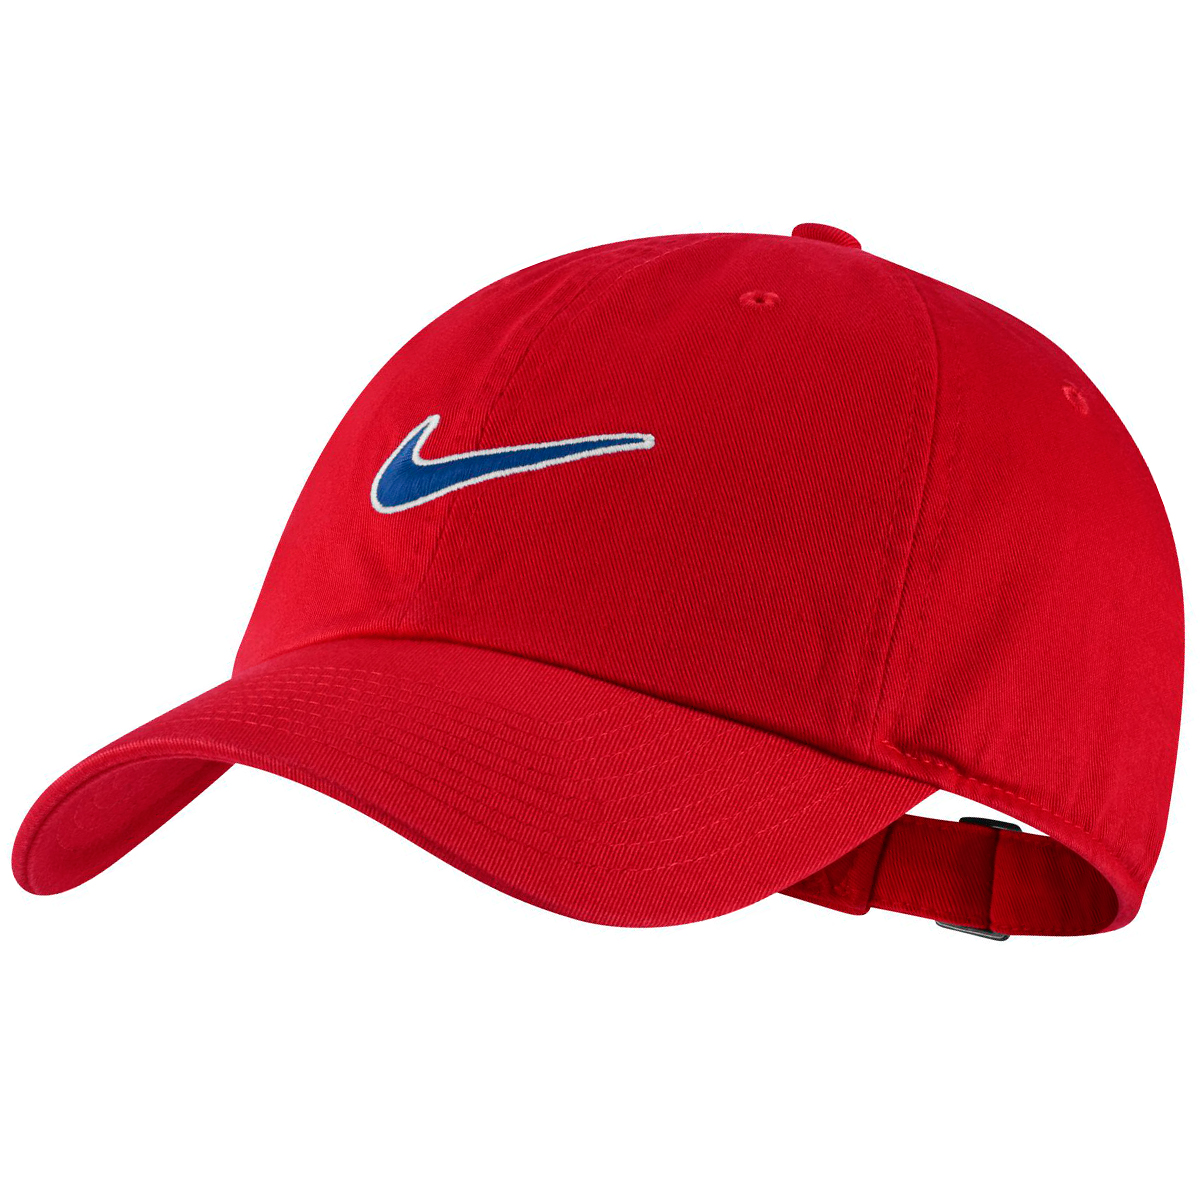 Nike Men's Sportswear Essentials Heritage86 Adjustable Cap - Red, ONESIZE